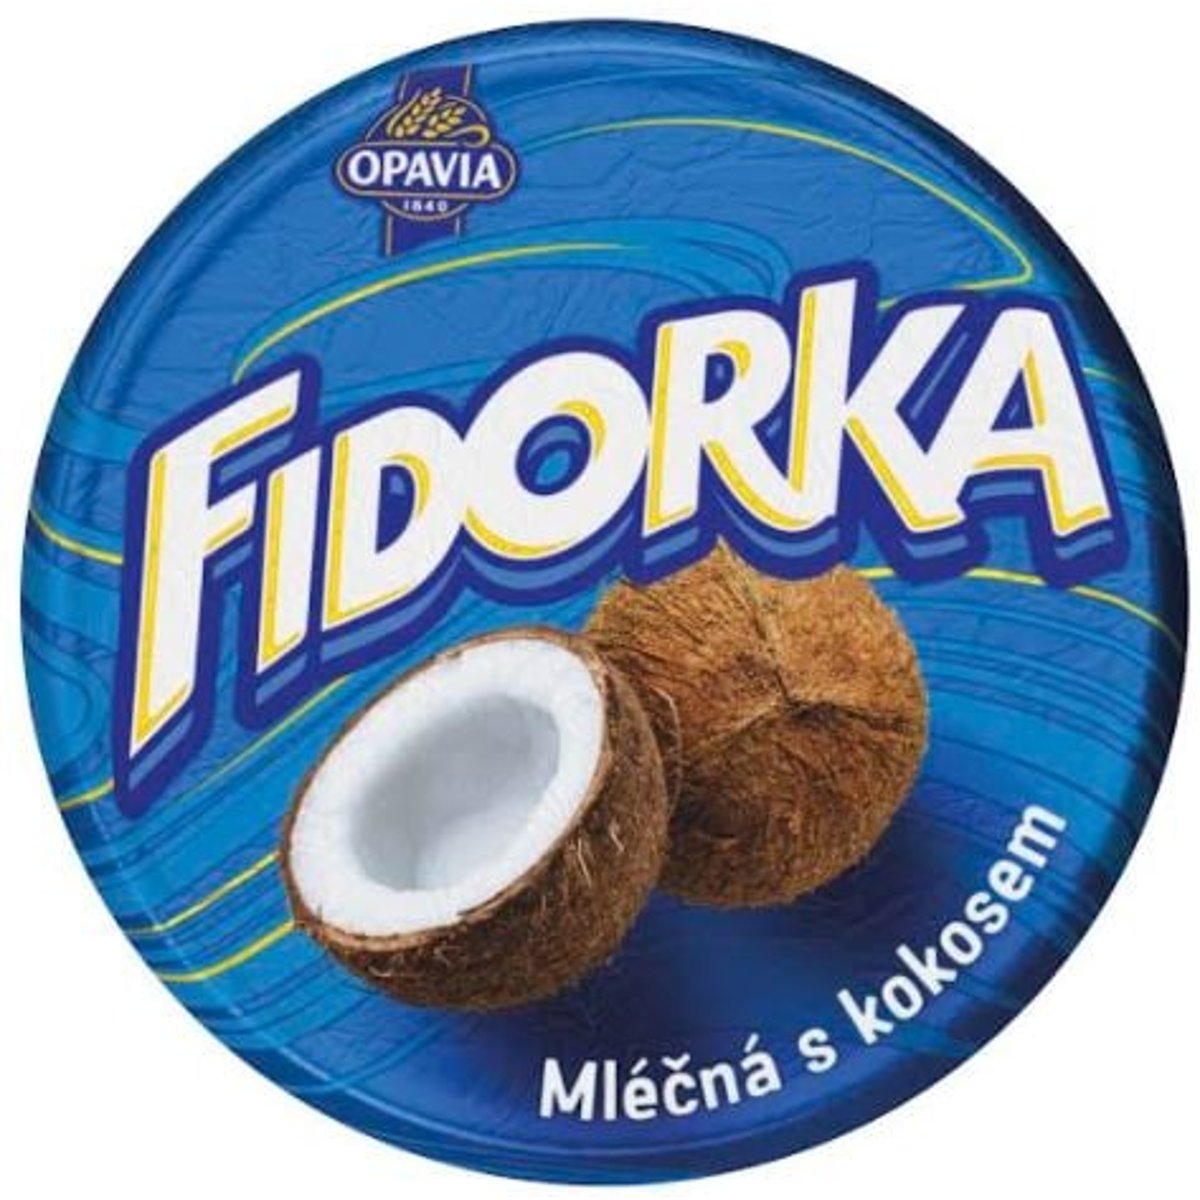 Opavia Fidorka Mléčná s kokosem modrá